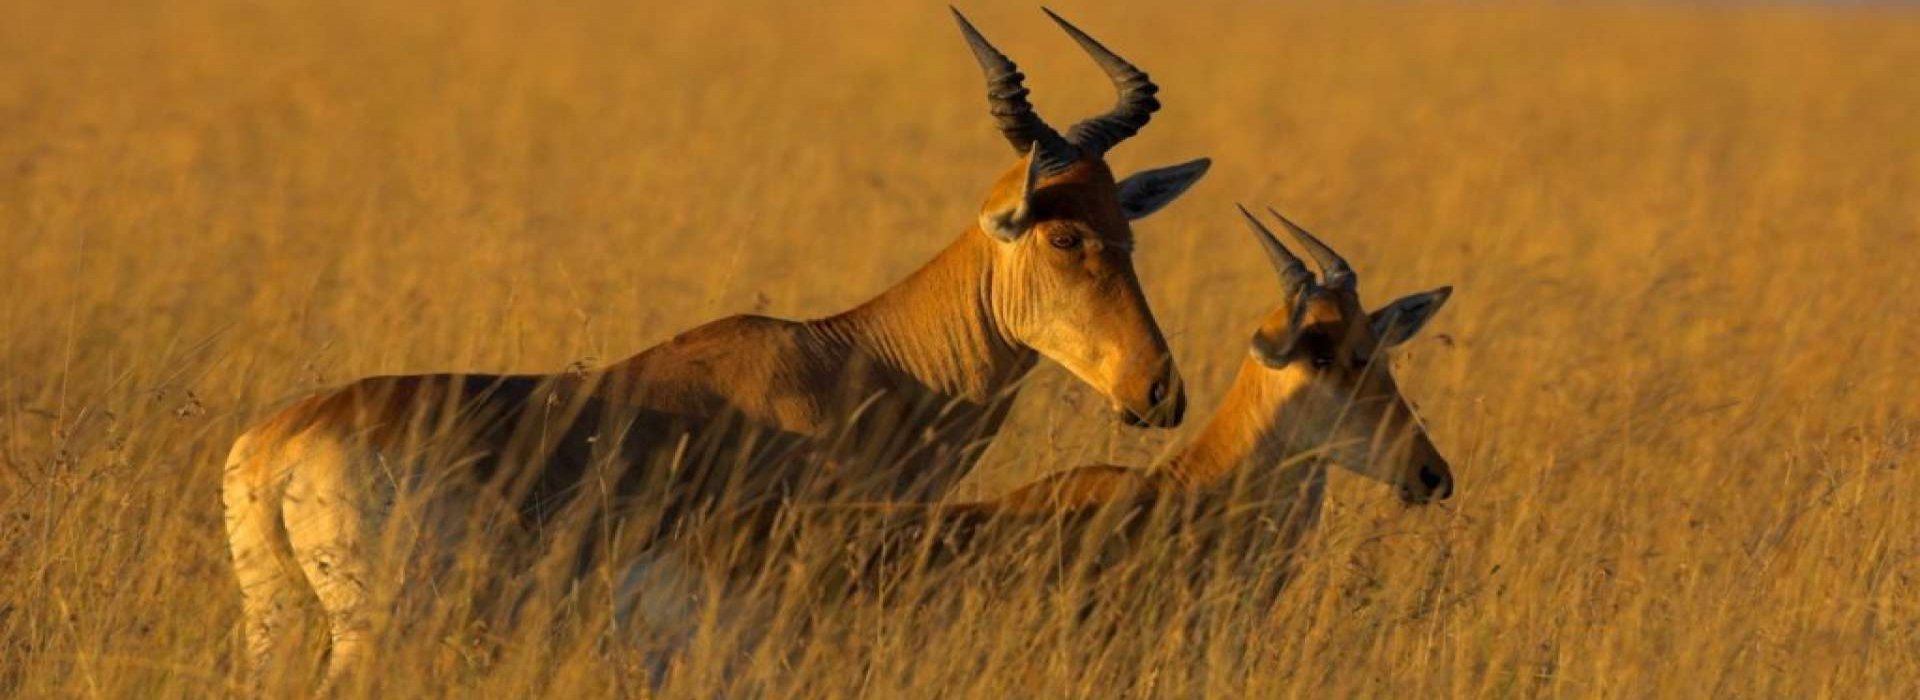 Background Image for Mkomazi National Park